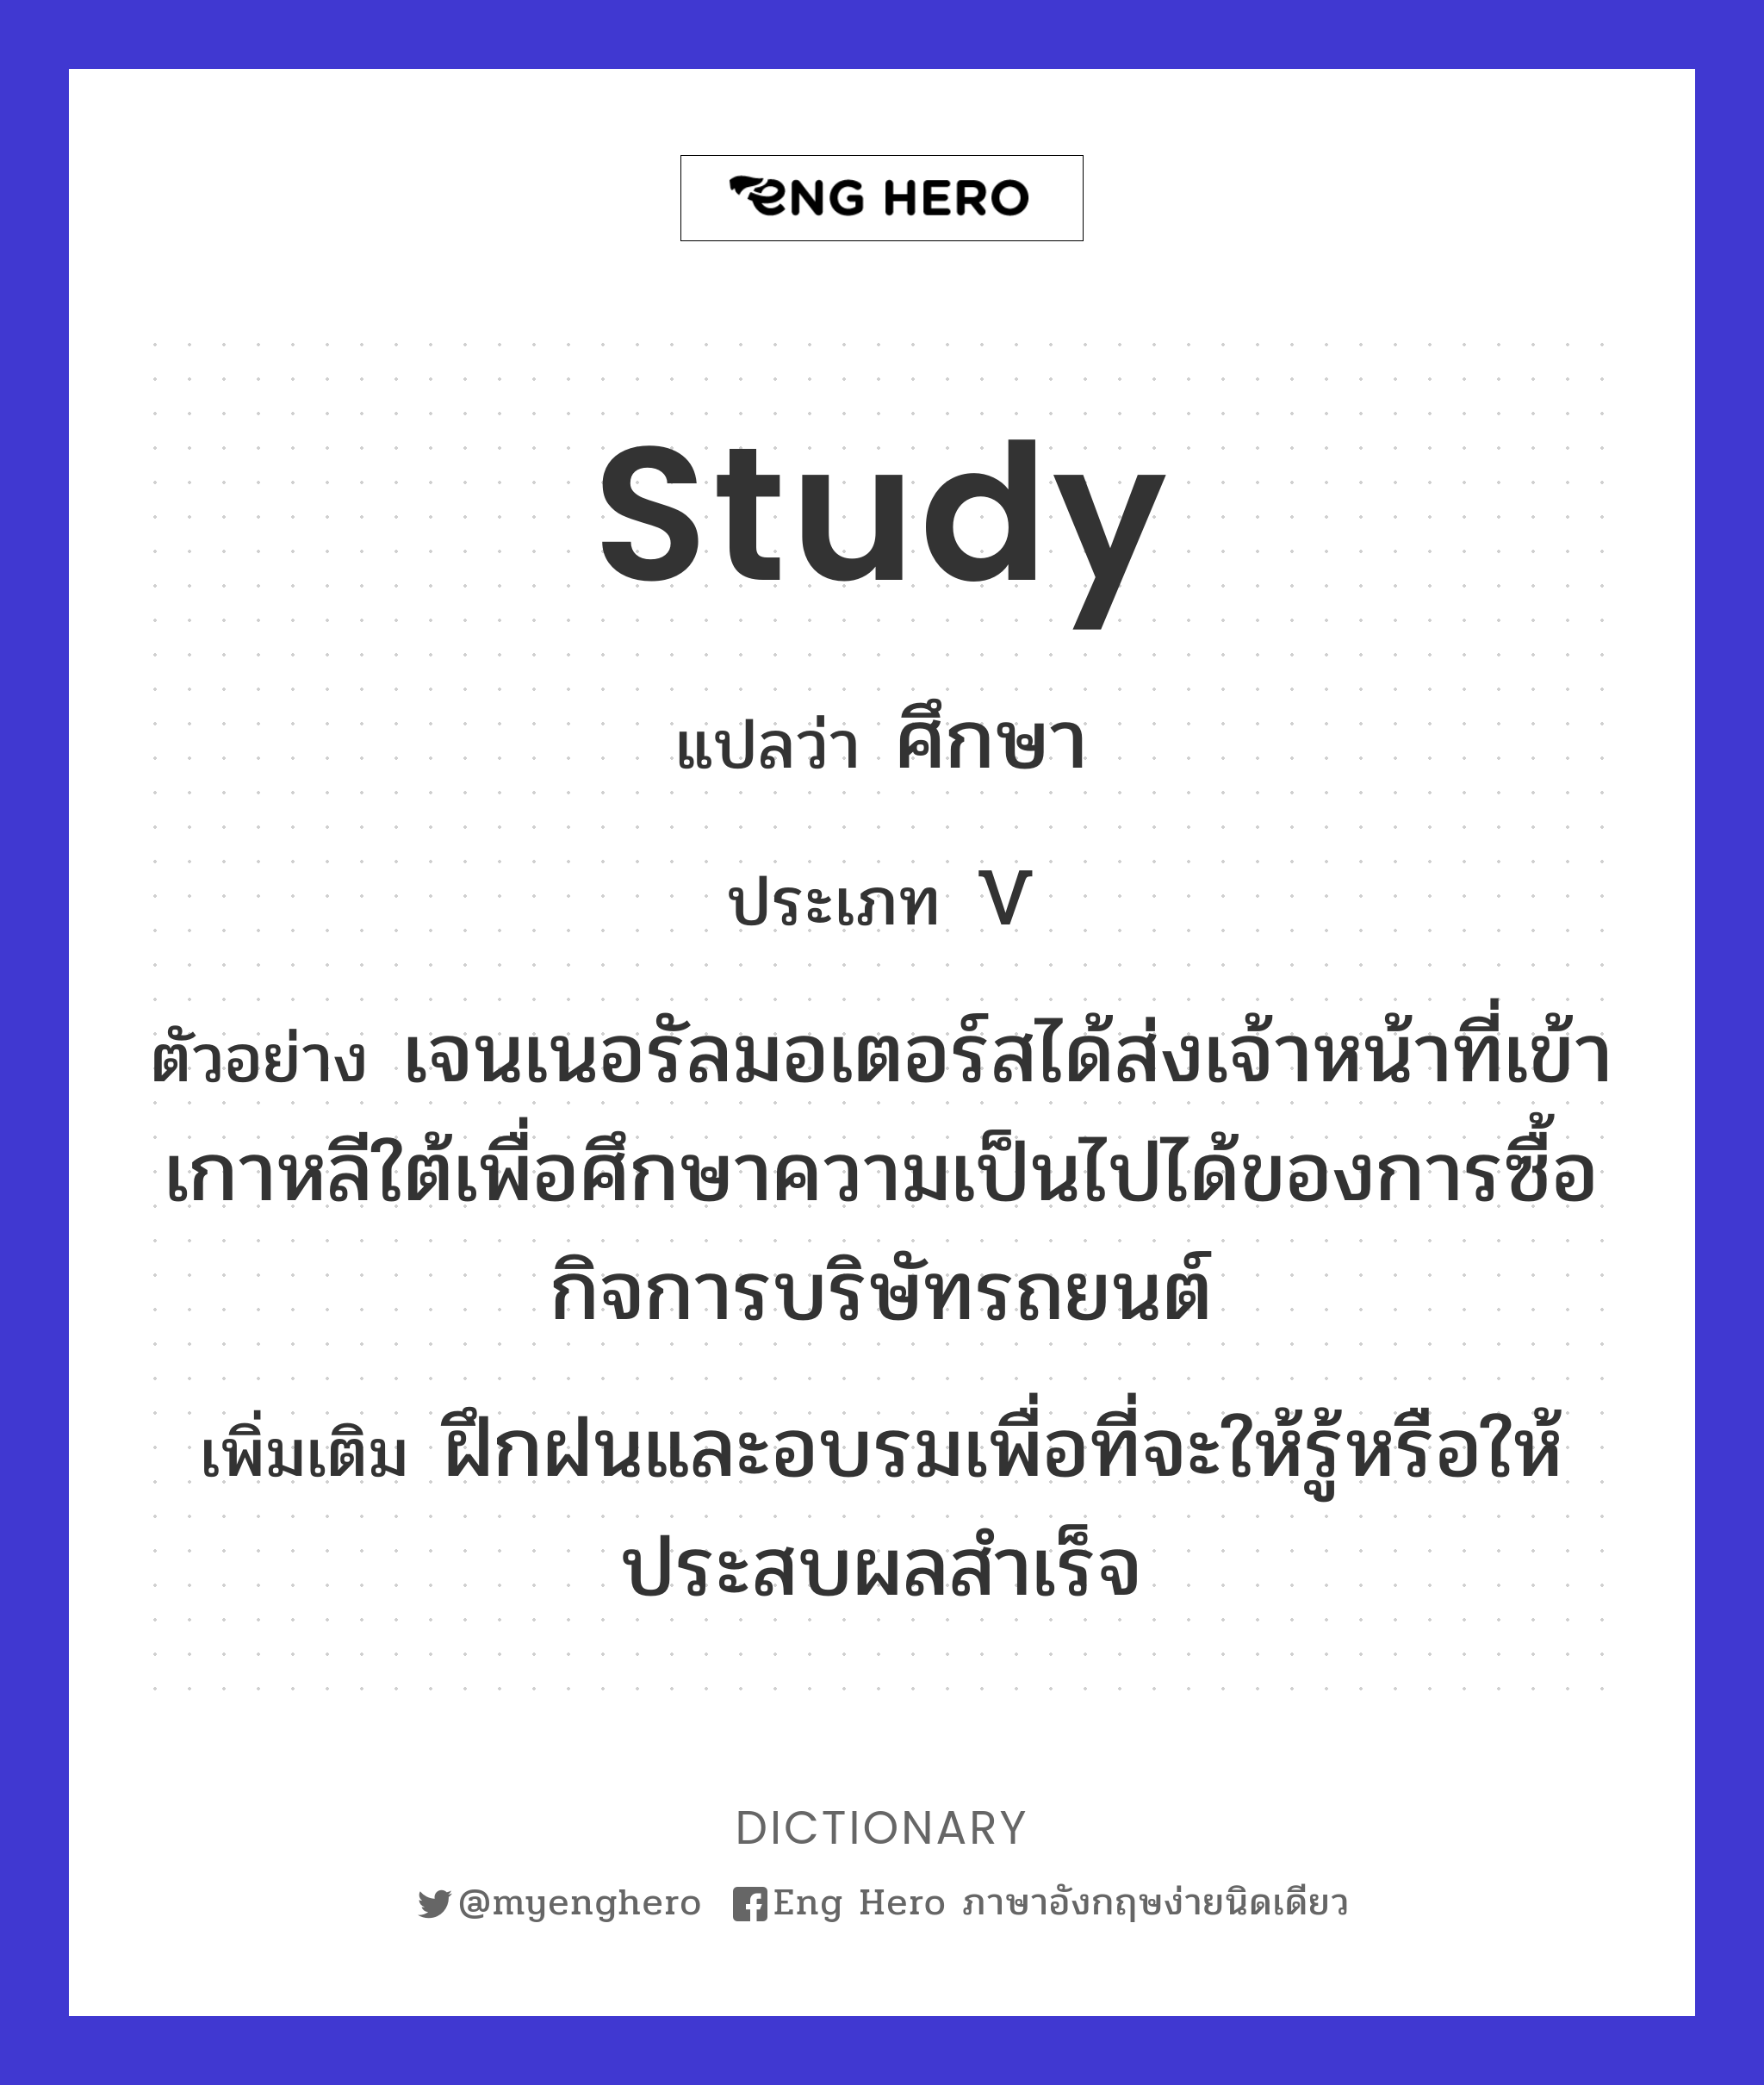 study